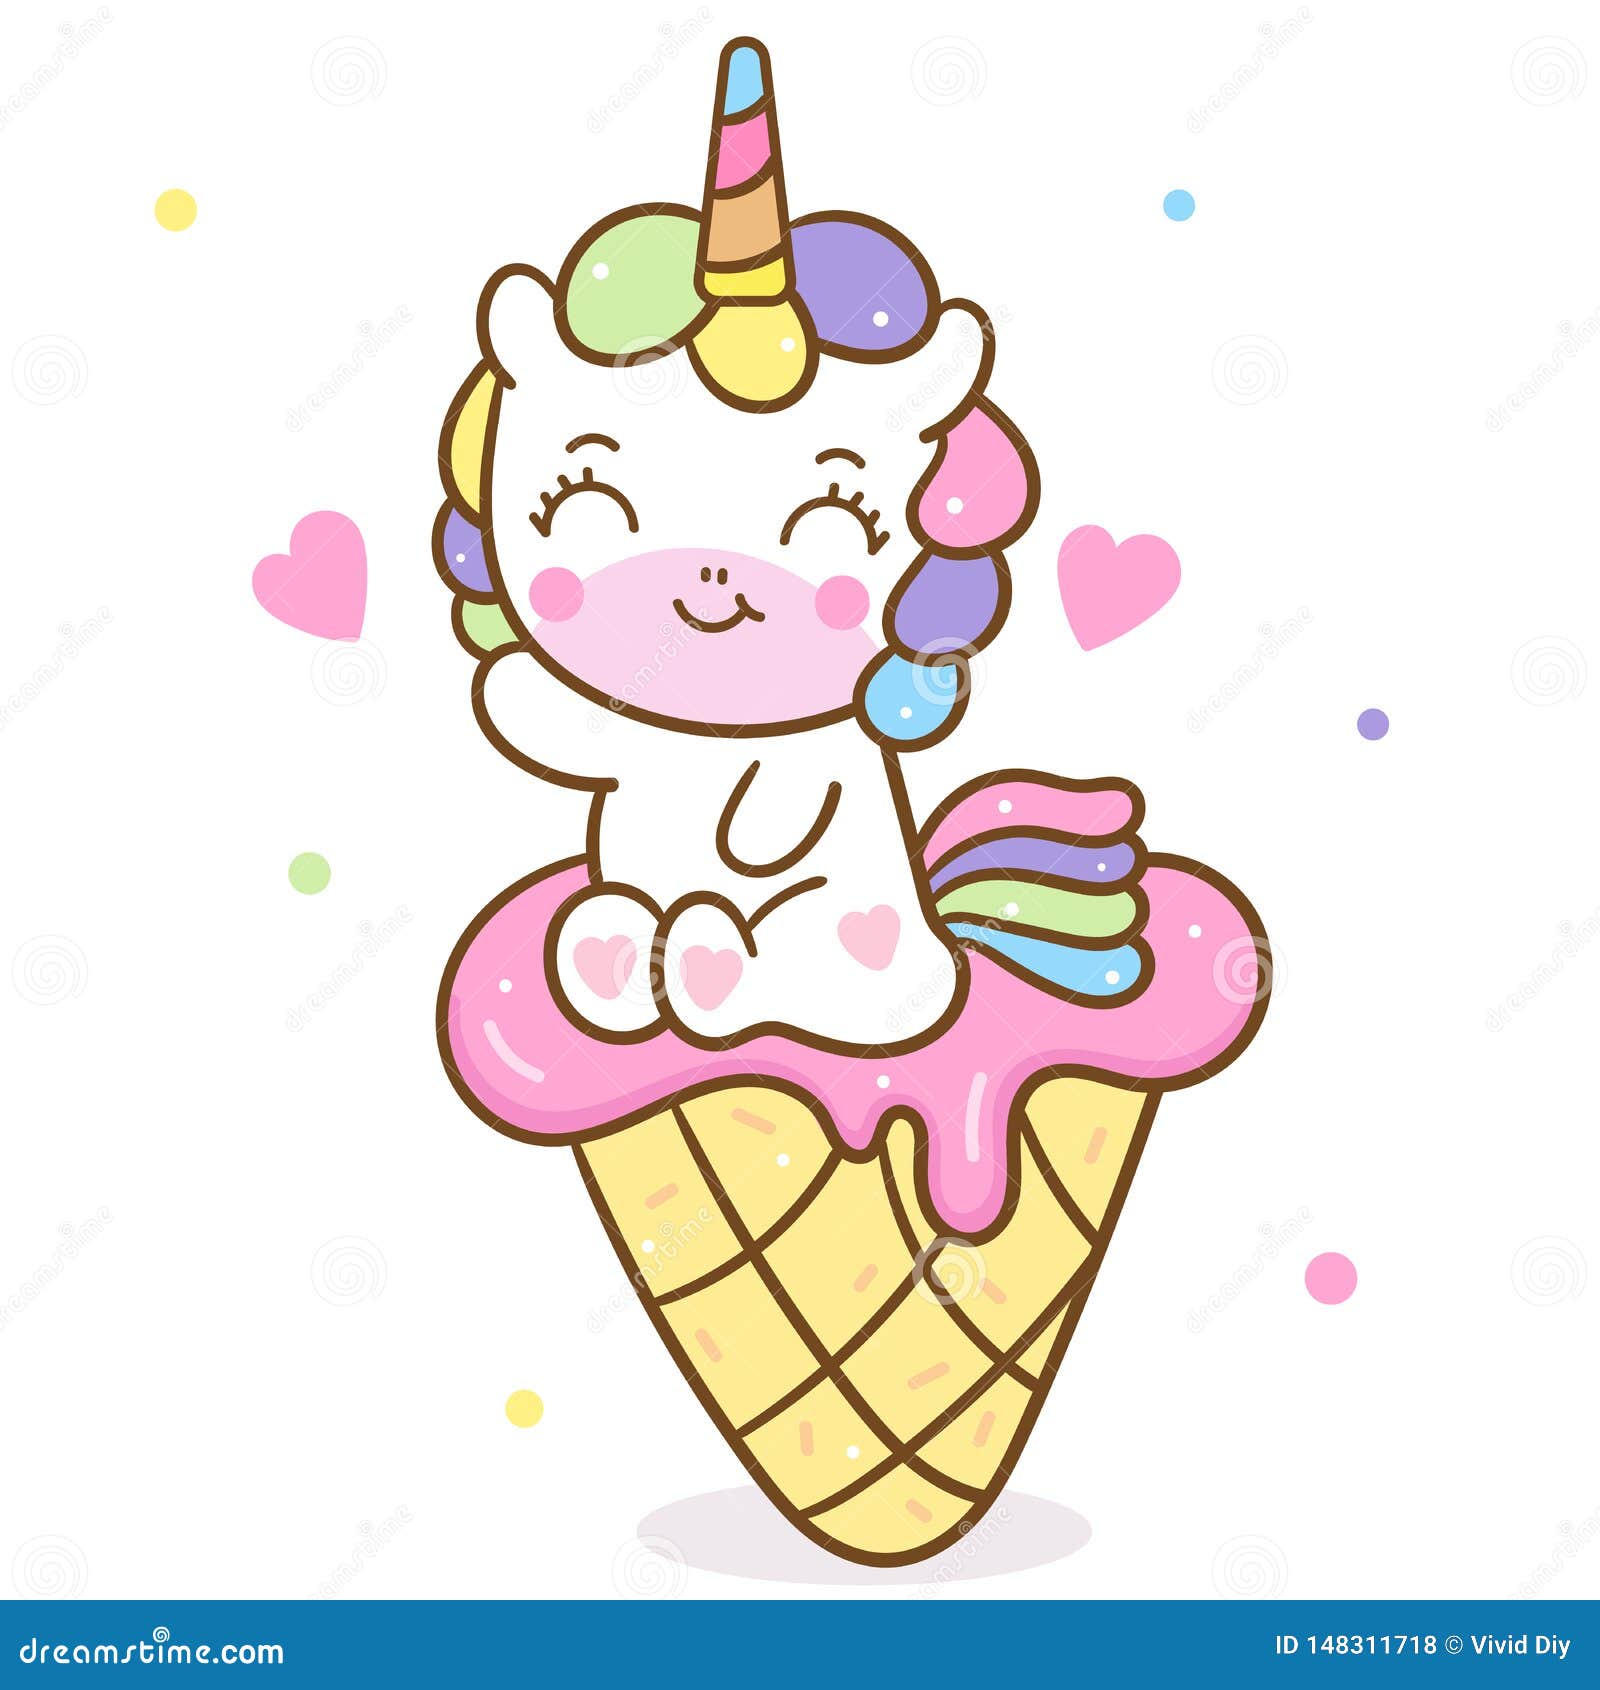 Illustrator Of Cute Unicorn Vector With Icecream Nursery